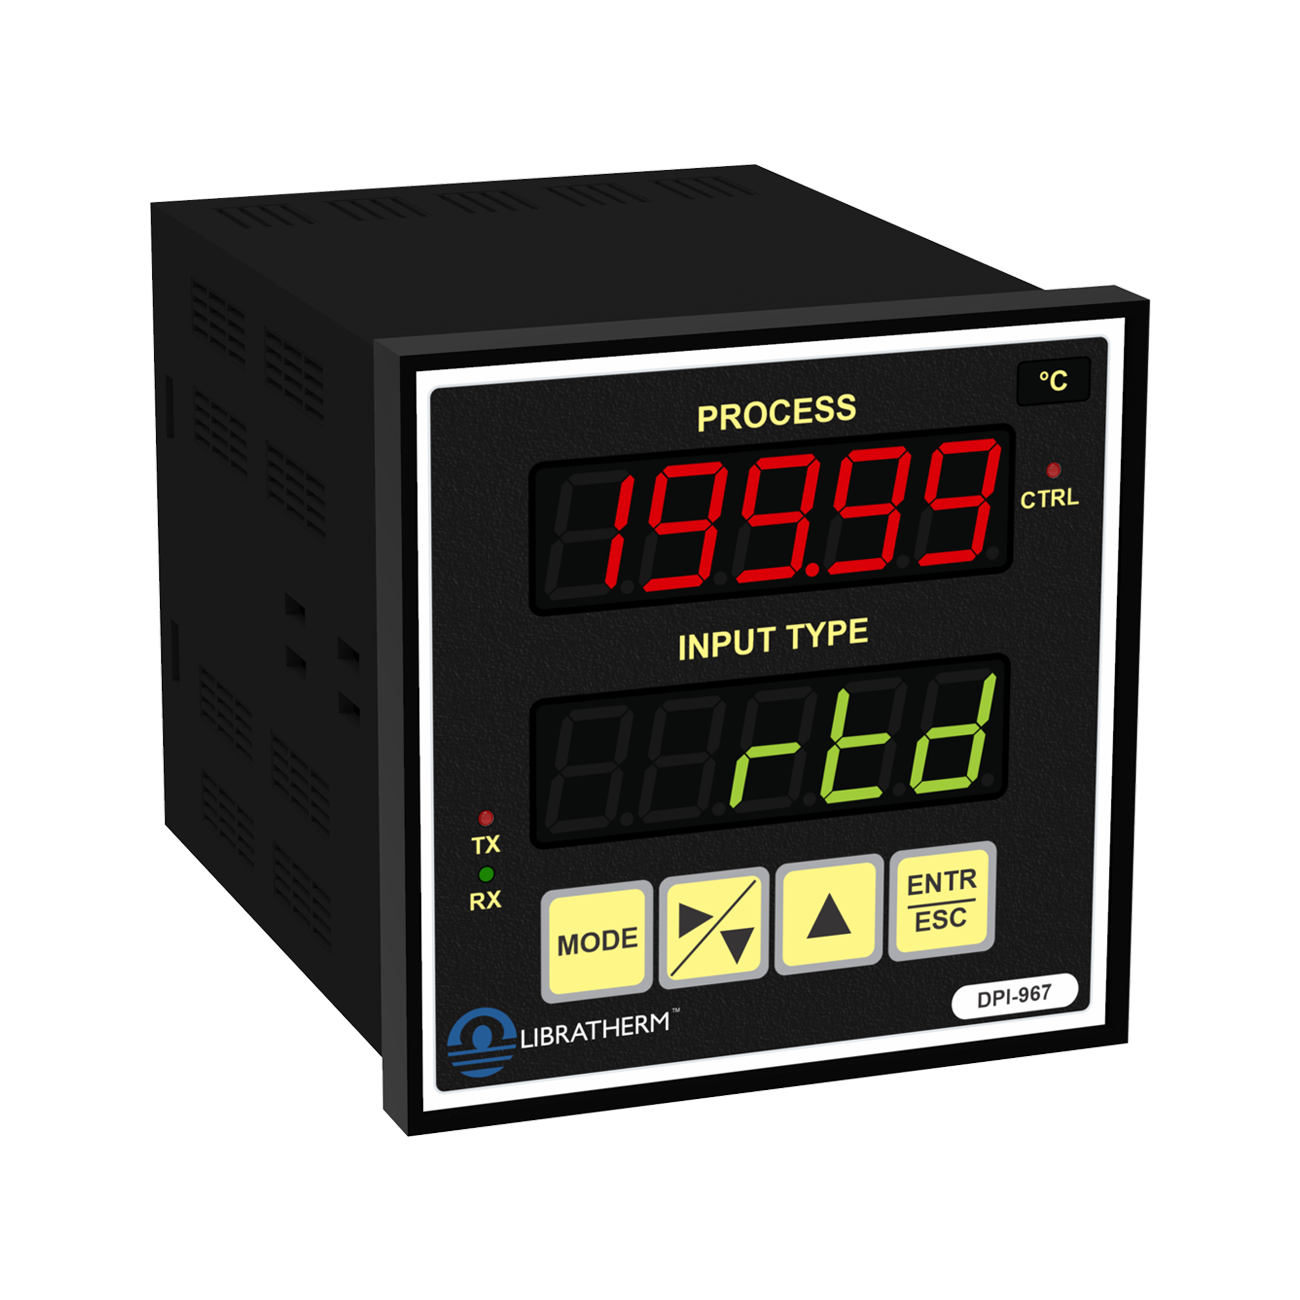 temperature-indicator-dpi-967-libratherm-instruments